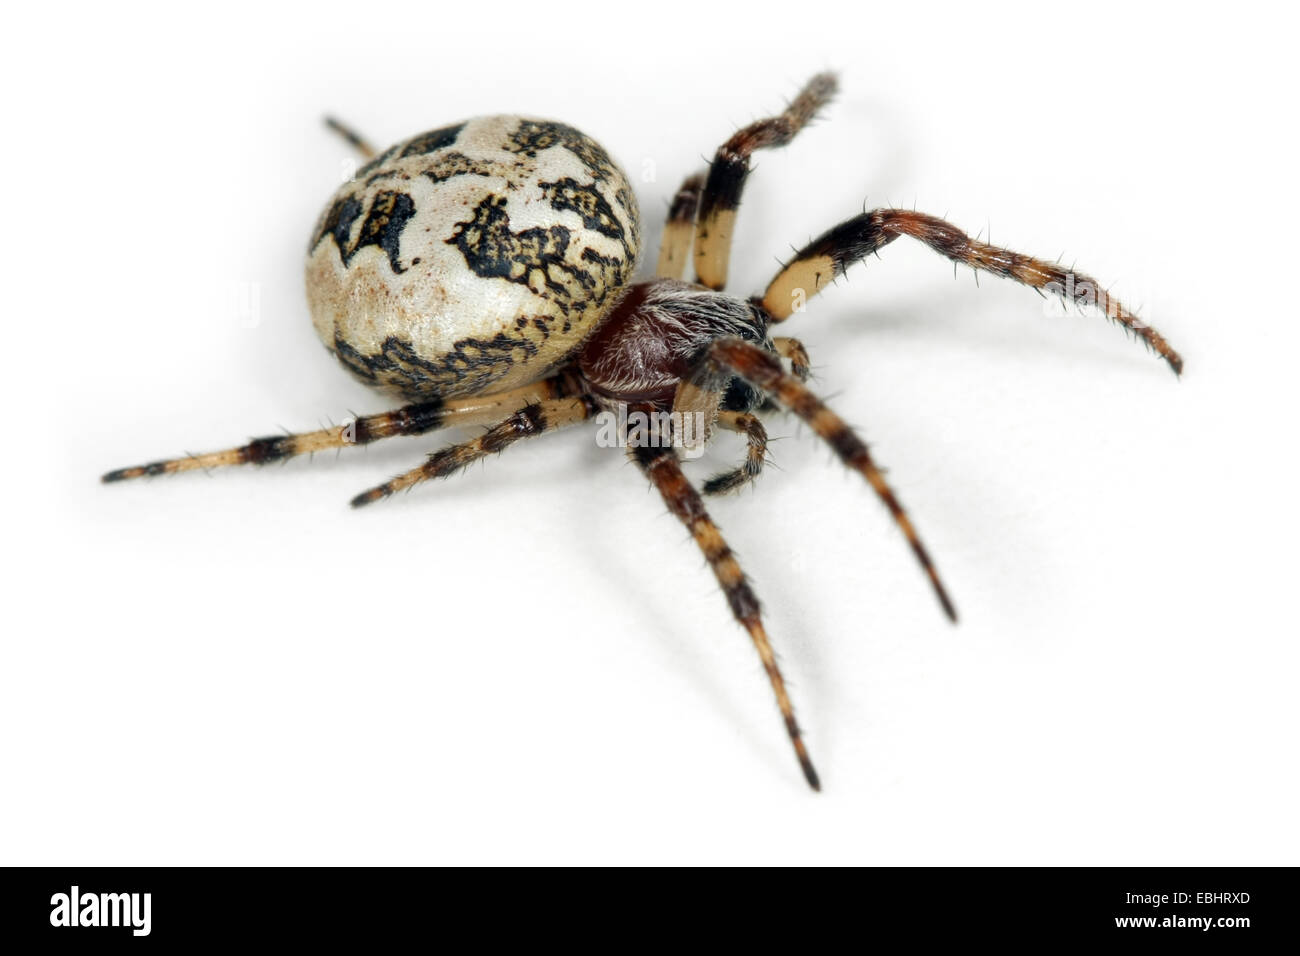 A female Furrow Orbweaver (Larinioides cornutus) on white background. Family Araneidae, Orbweaving spiders. Stock Photo